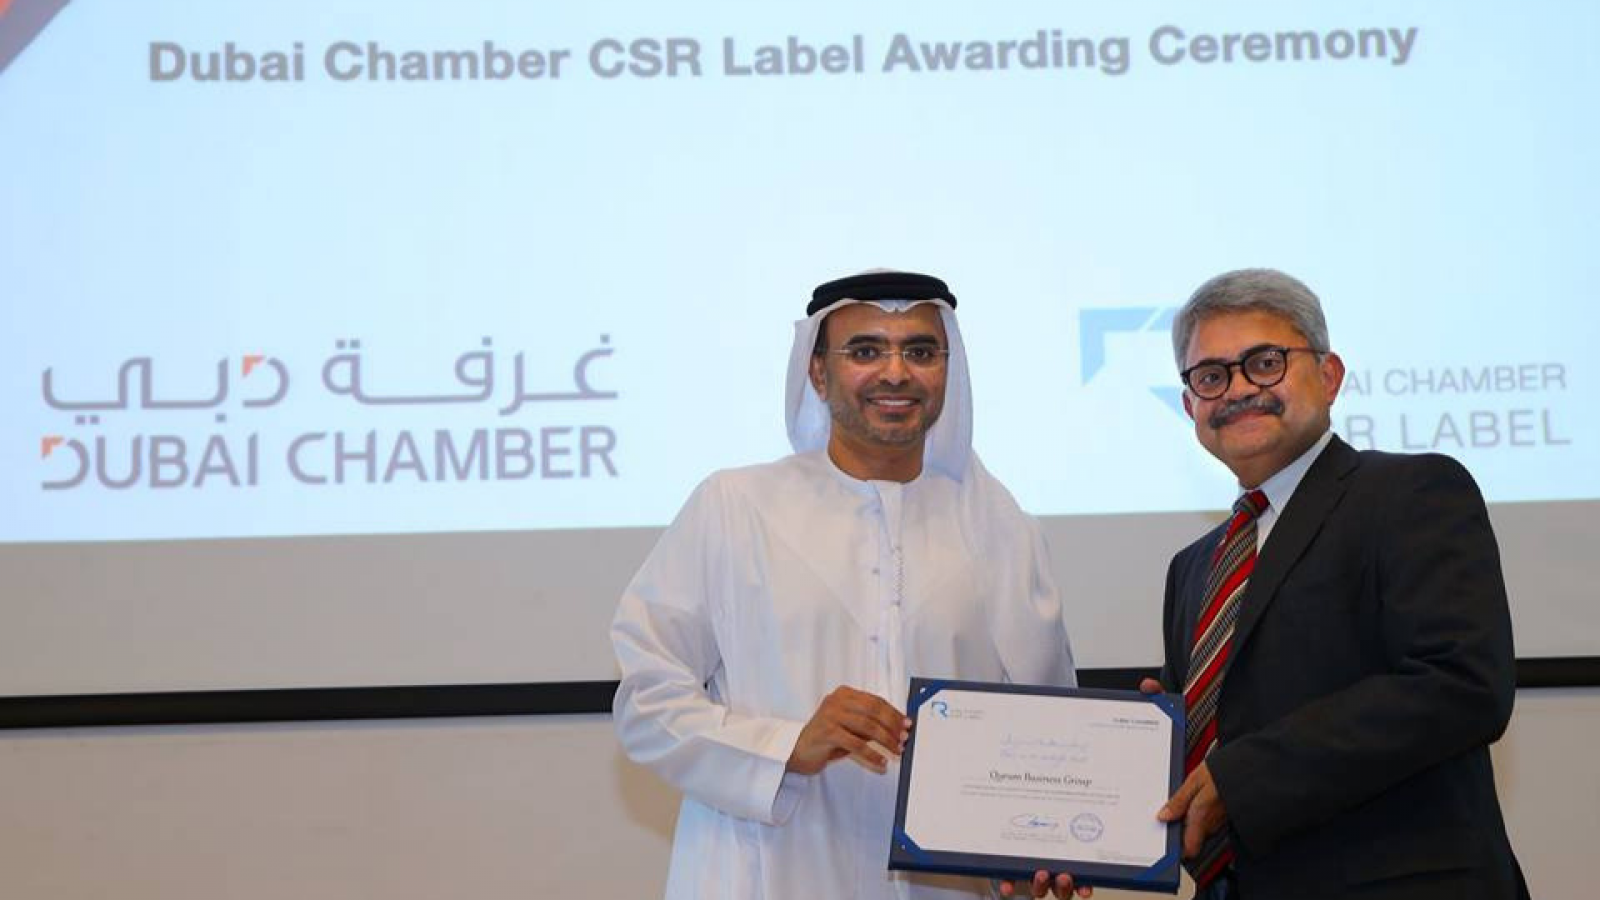 QBG once again received the prestigious CSR Label Award